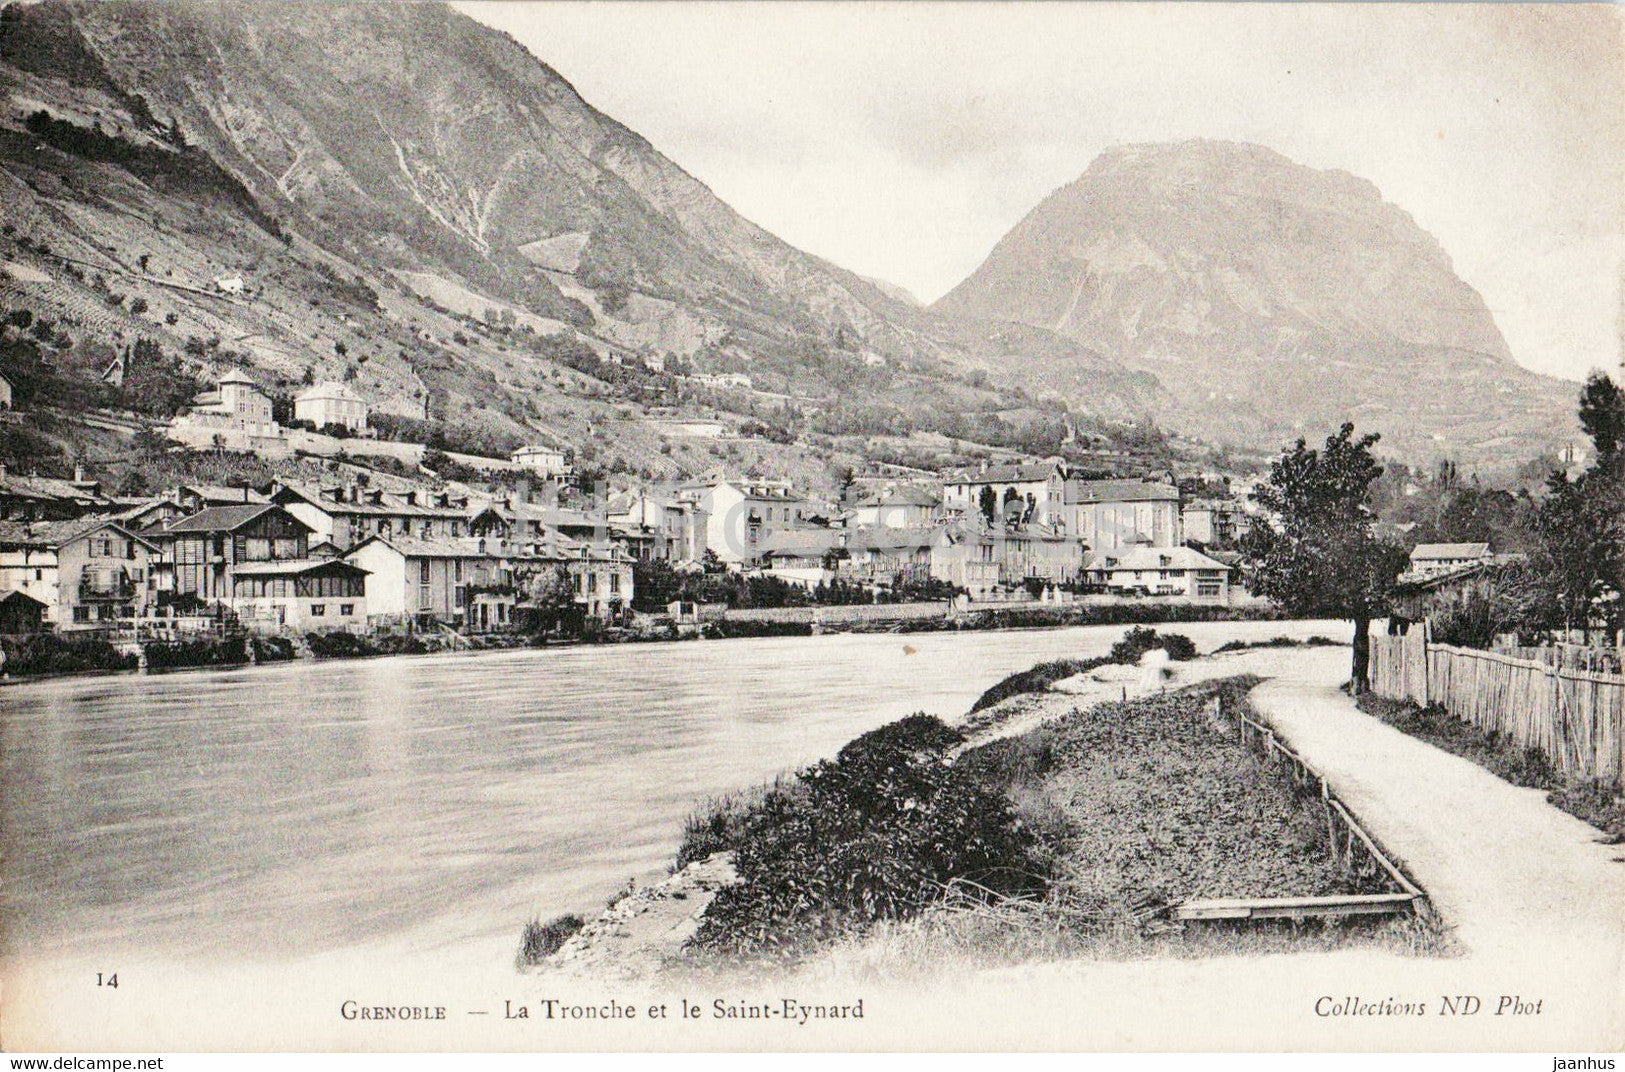 Grenoble - La Tronche et le Saint Eynard - 14 - old postcard - France - unused - JH Postcards